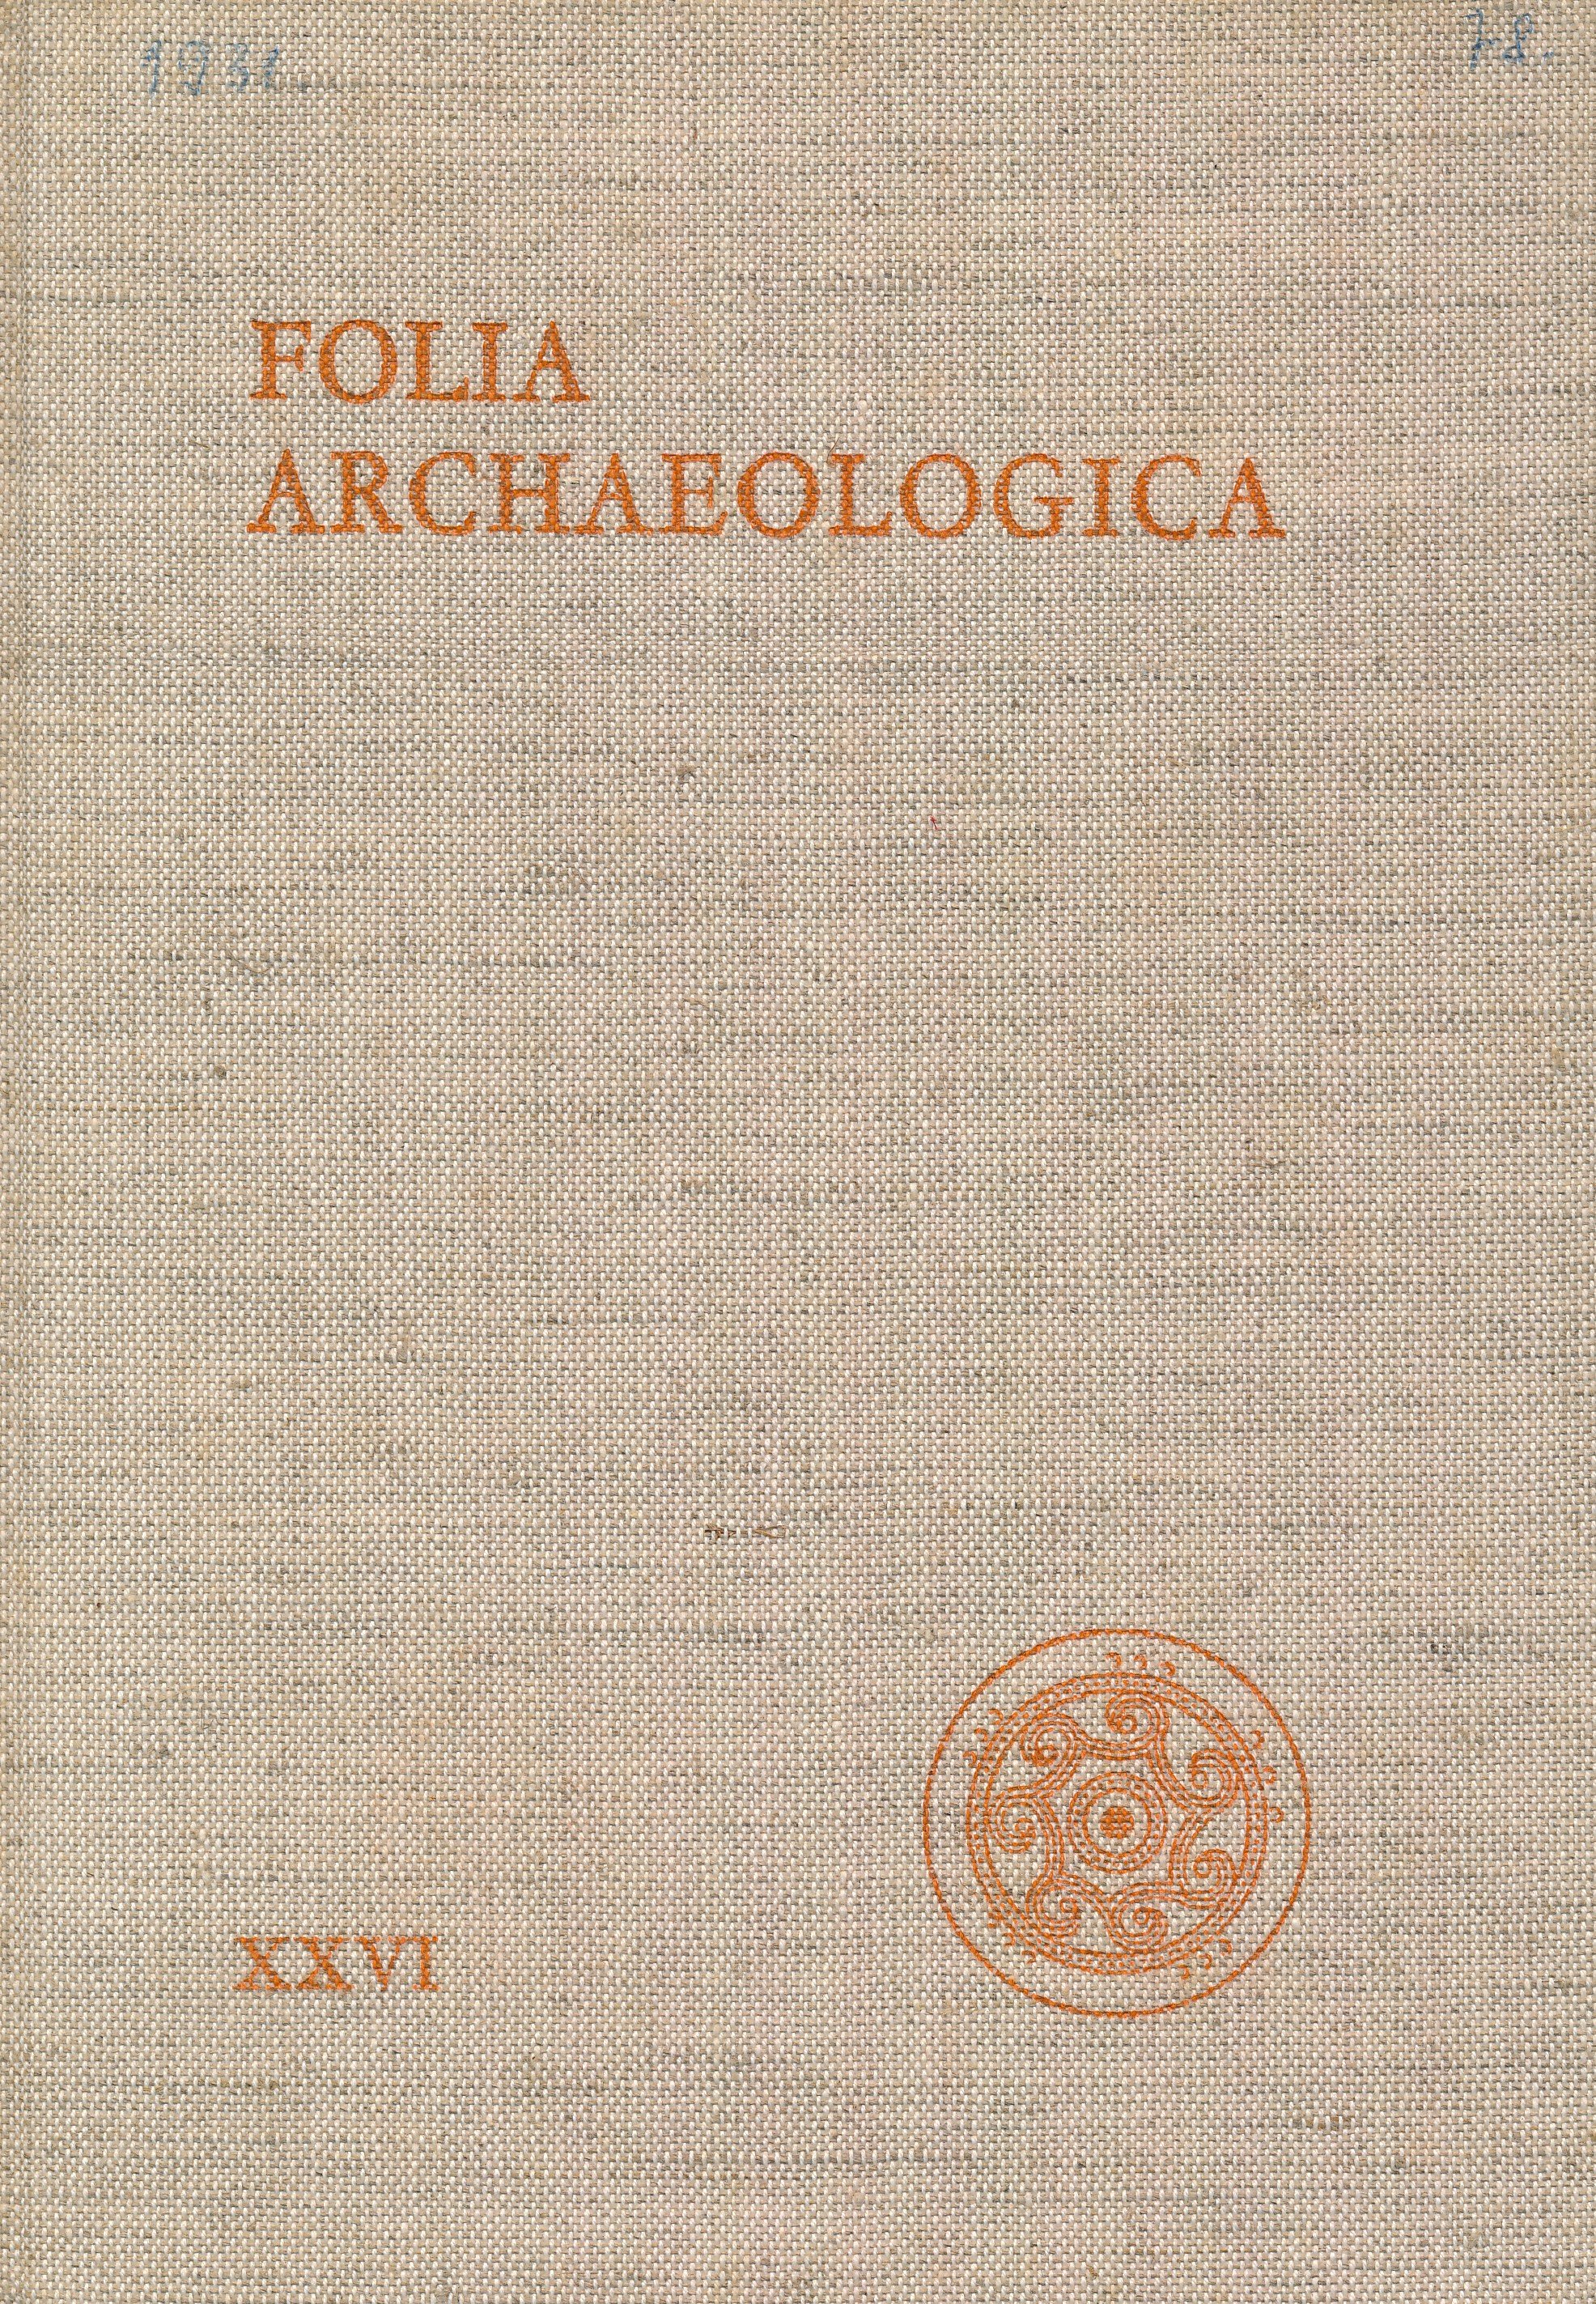 Folia archaeologica XXVI. (Erkel Ferenc Területi Múzeum, Gyula CC BY-NC-SA)